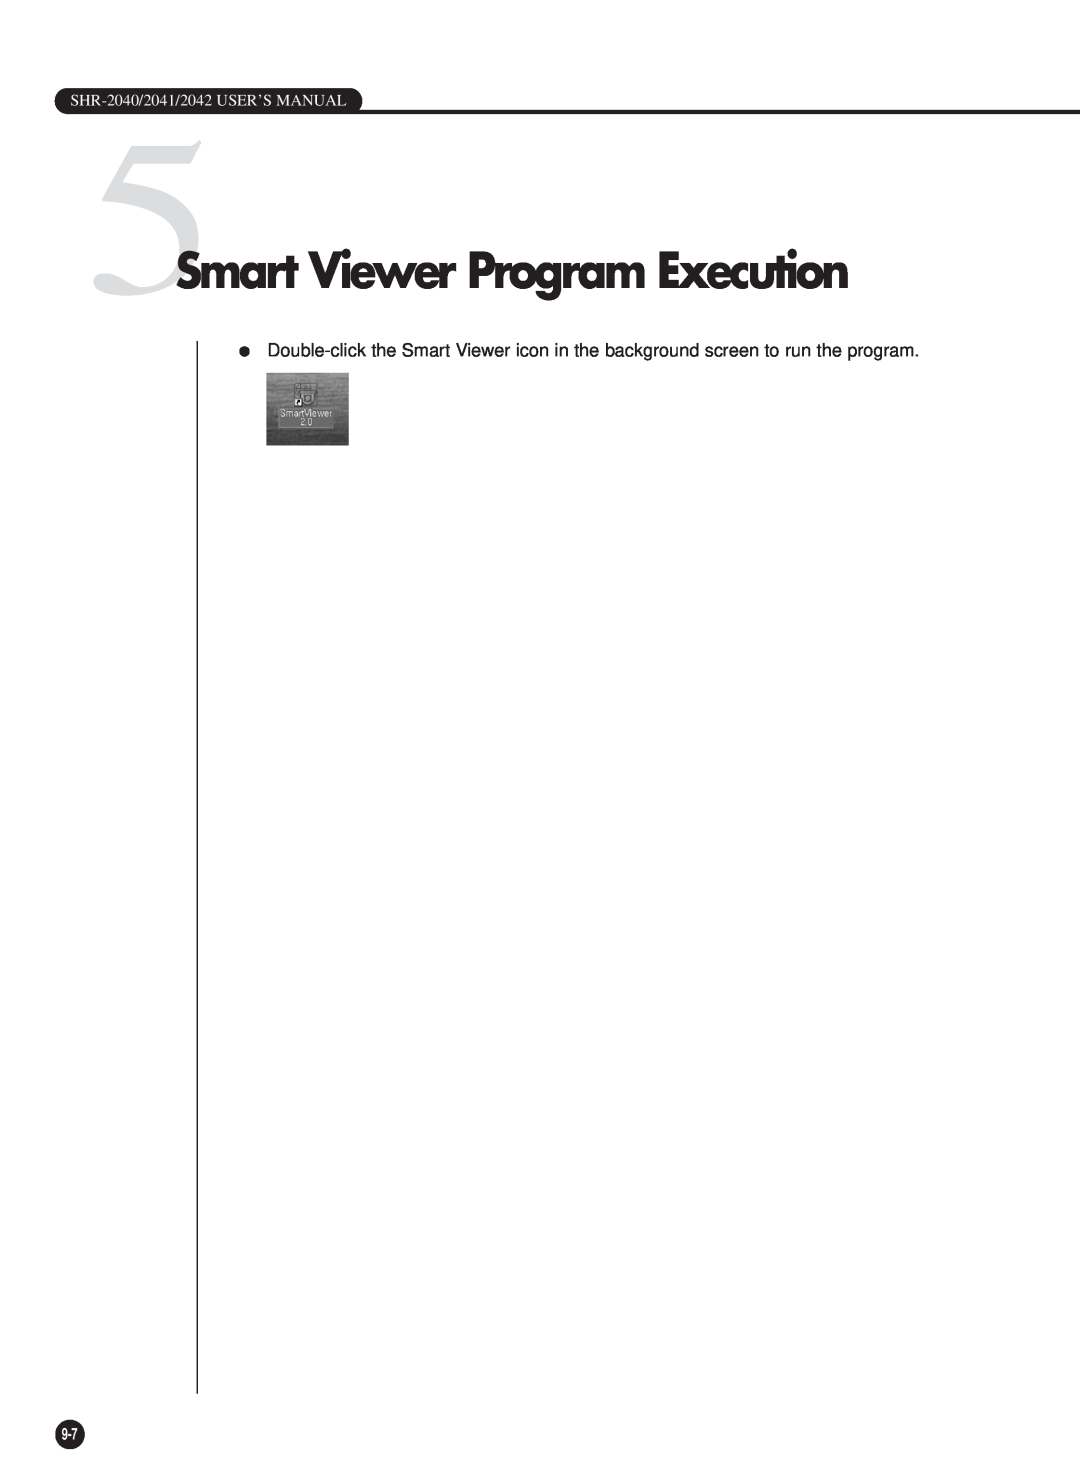 Samsung SHR-2040P/GAR, SHR-2042P, SHR-2040PX manual 5Smart Viewer Program Execution, SHR-2040/2041/2042 USER’S MANUAL 